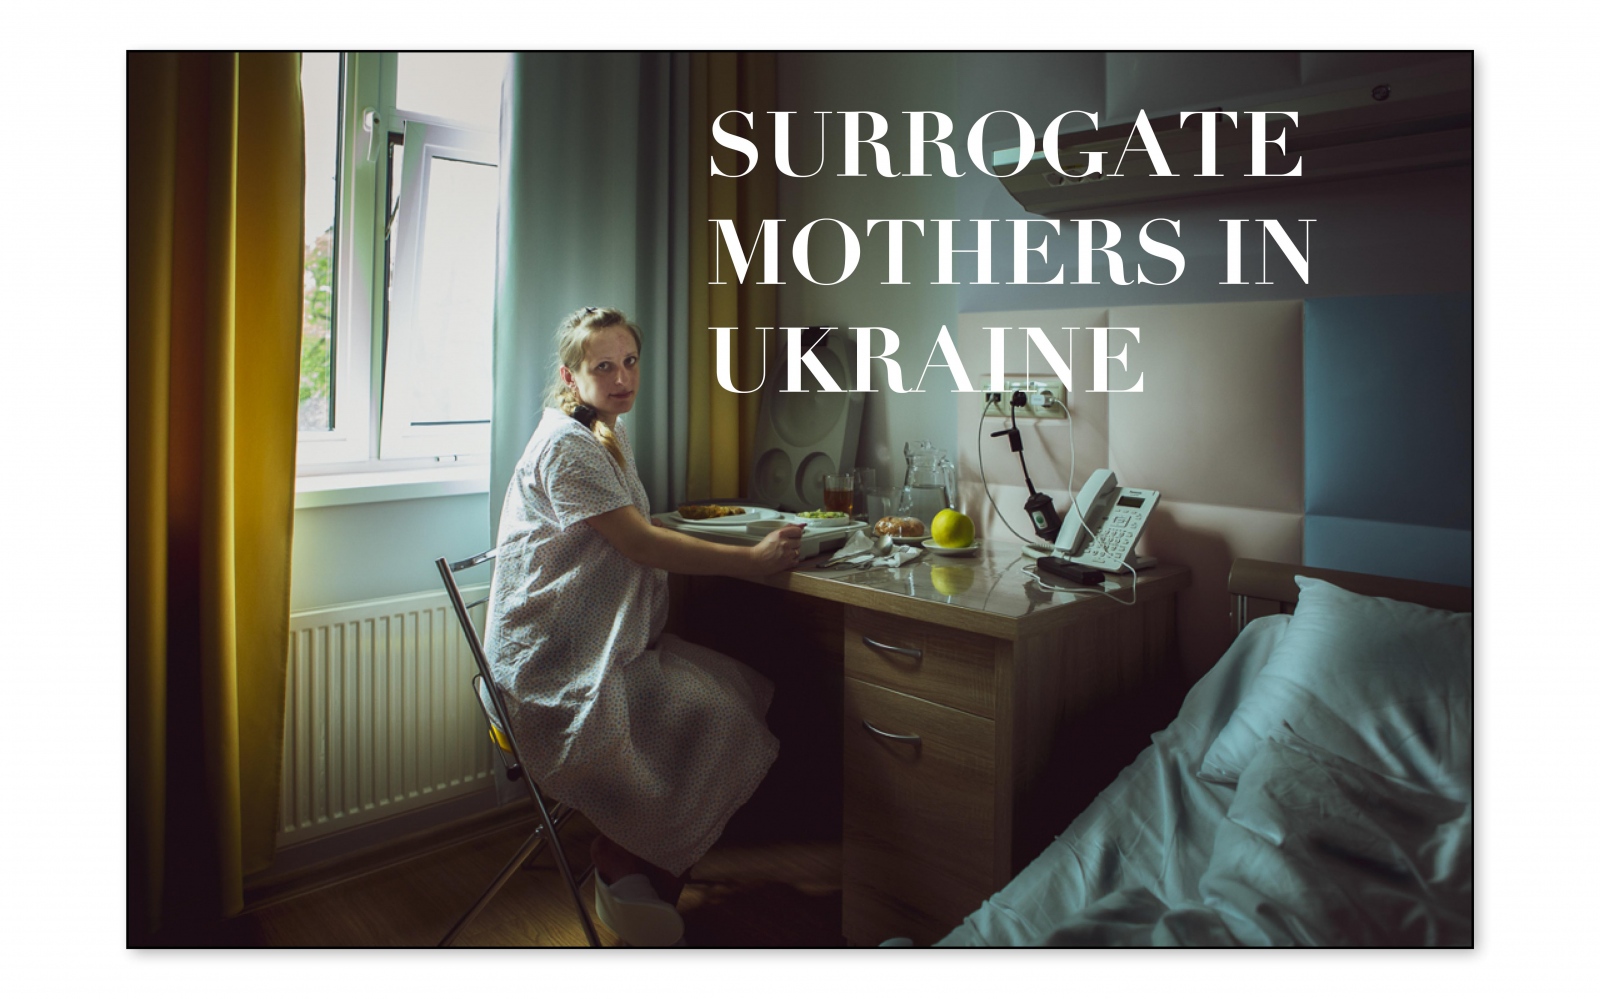 KIEV - Surrogacy buisness